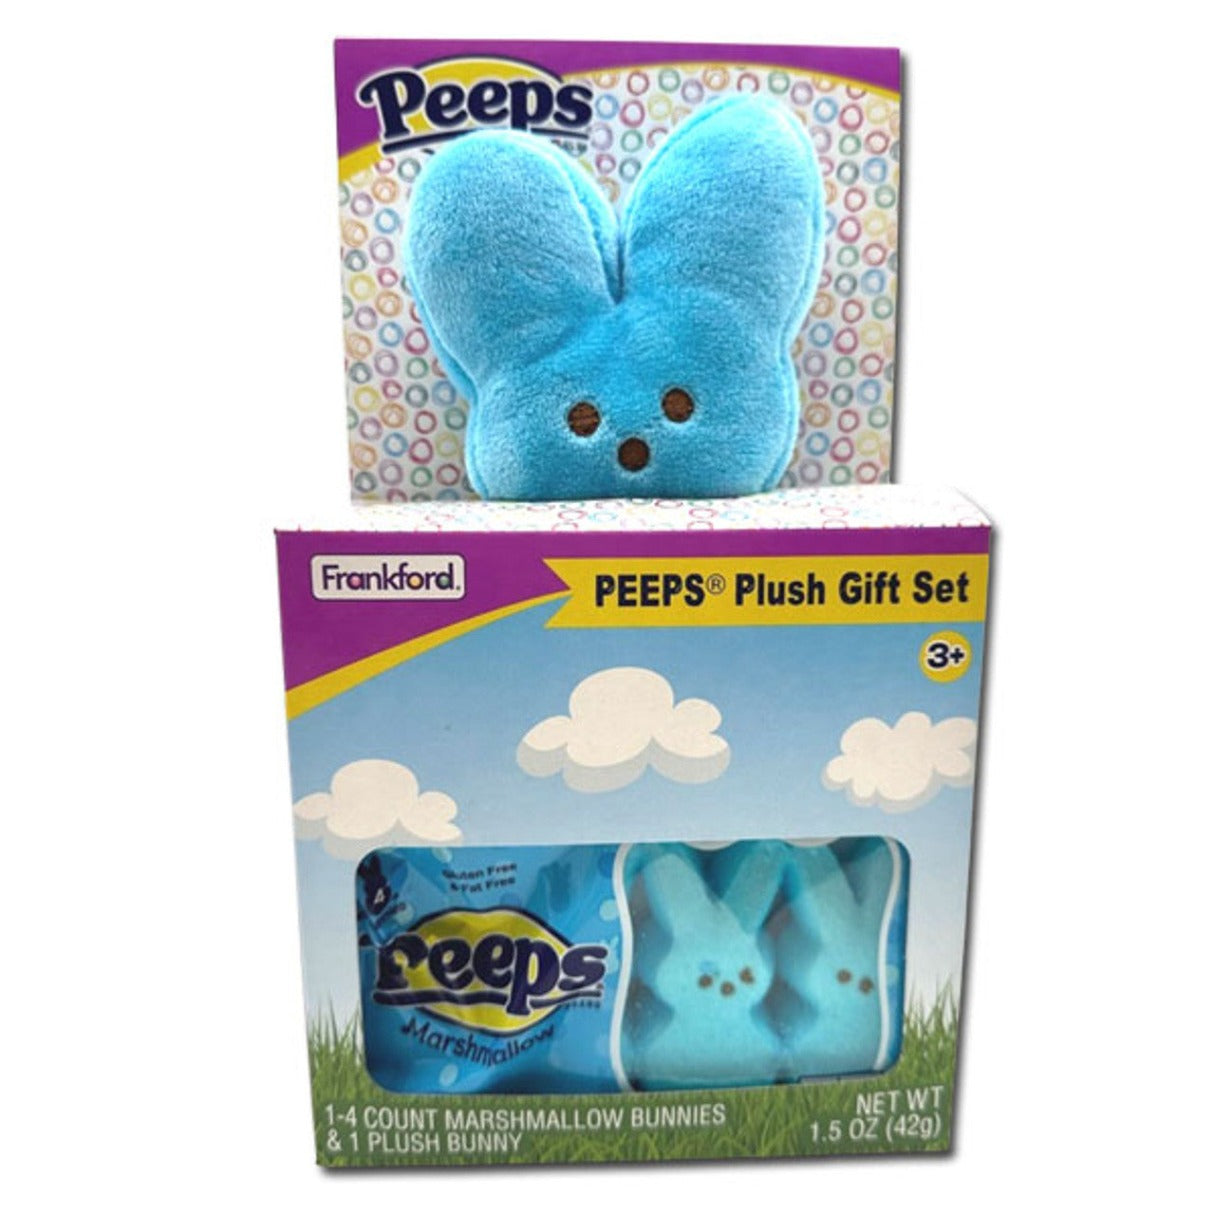 Peeps Plush Bunny Gift Set 1.5oz - 6ct